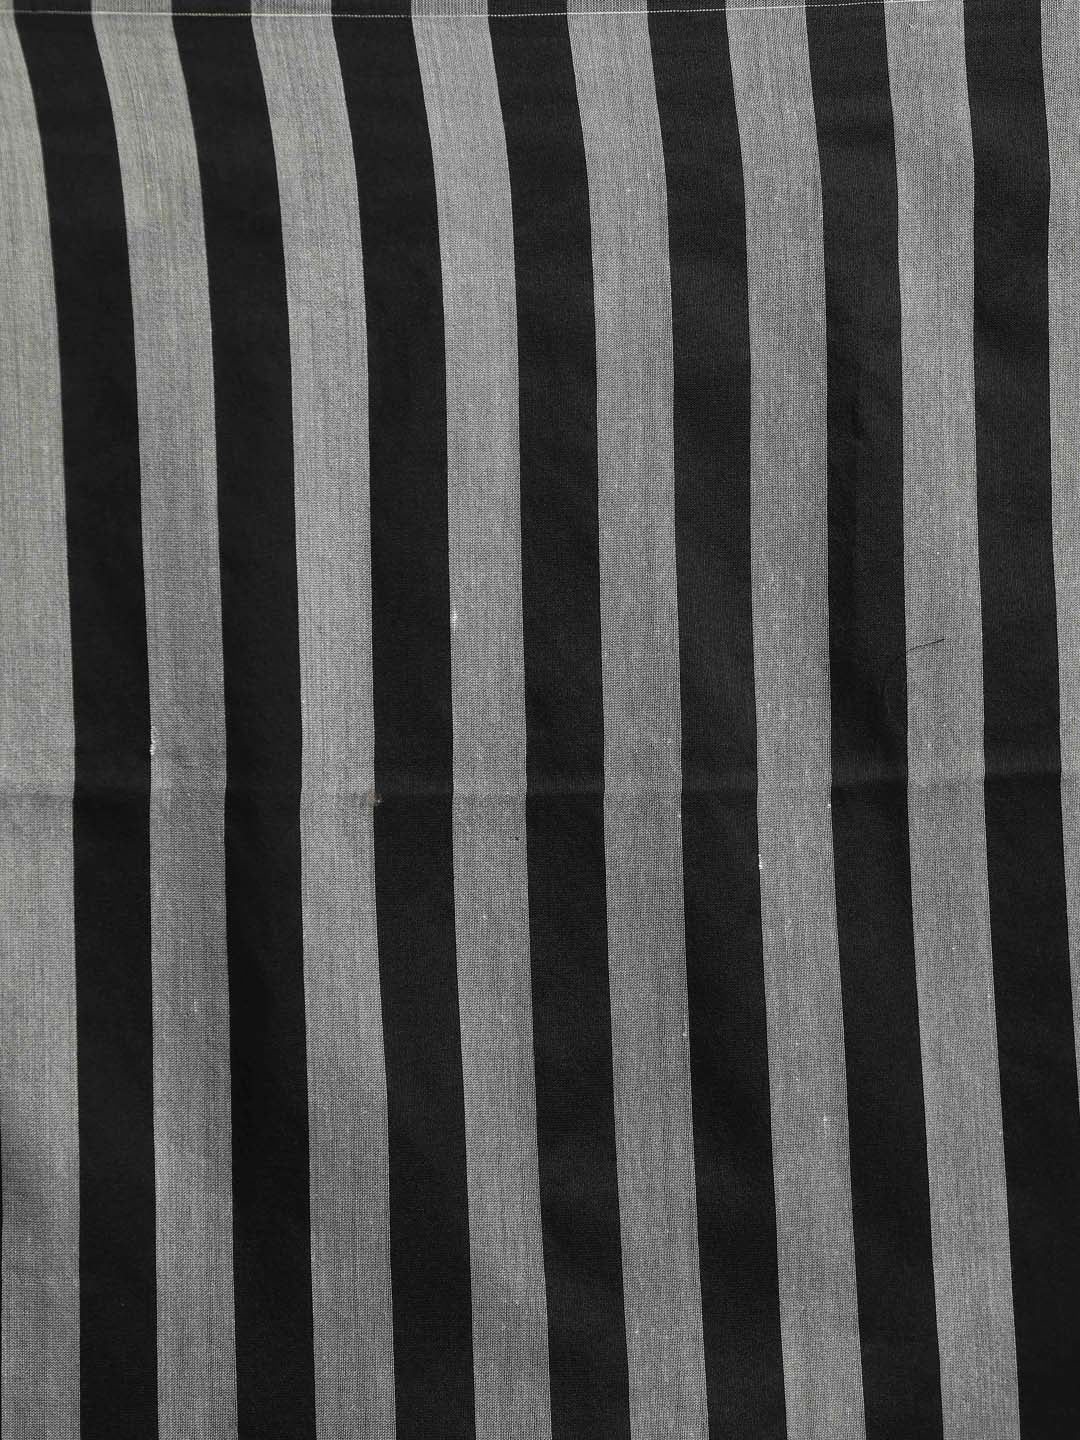 Indethnic Black Saree with Grey Striped Pleats and Pallu - Saree Detail View